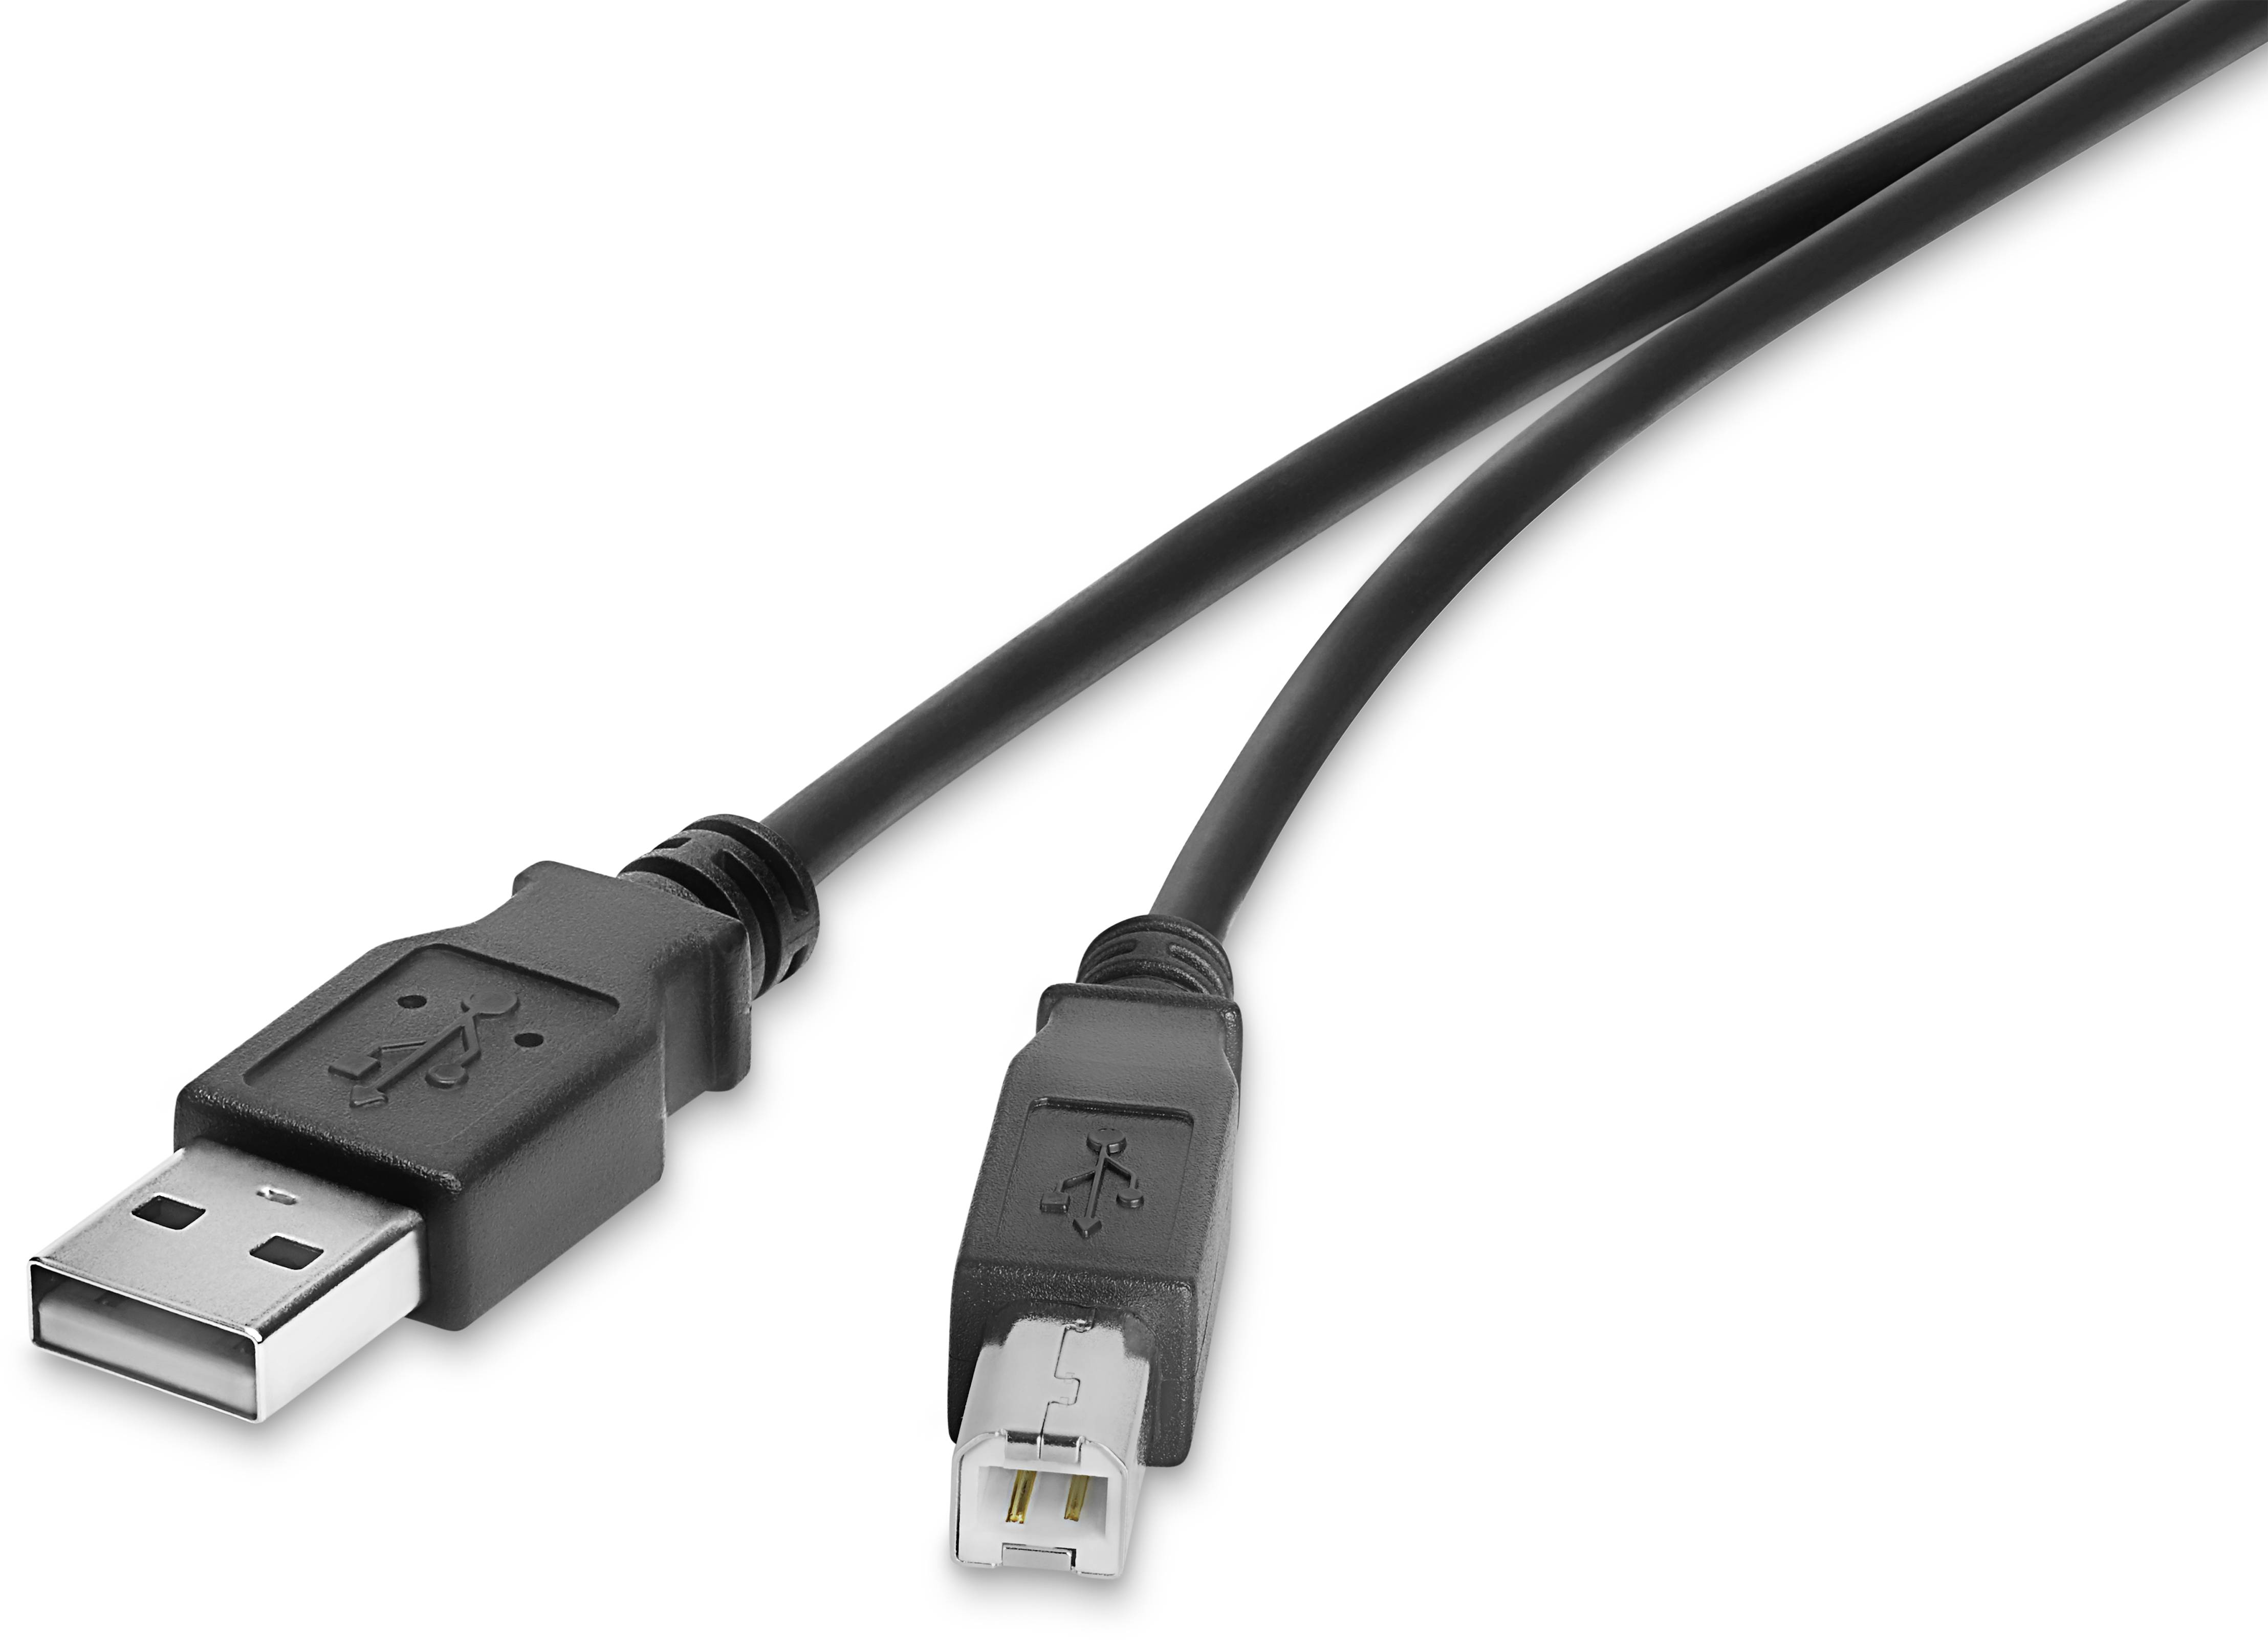 CONRAD Renkforce USB 2.0 Anschlusskabel [1x USB 2.0 Stecker A - 1x USB 2.0 Stecker B] 1 m Schwarz ve